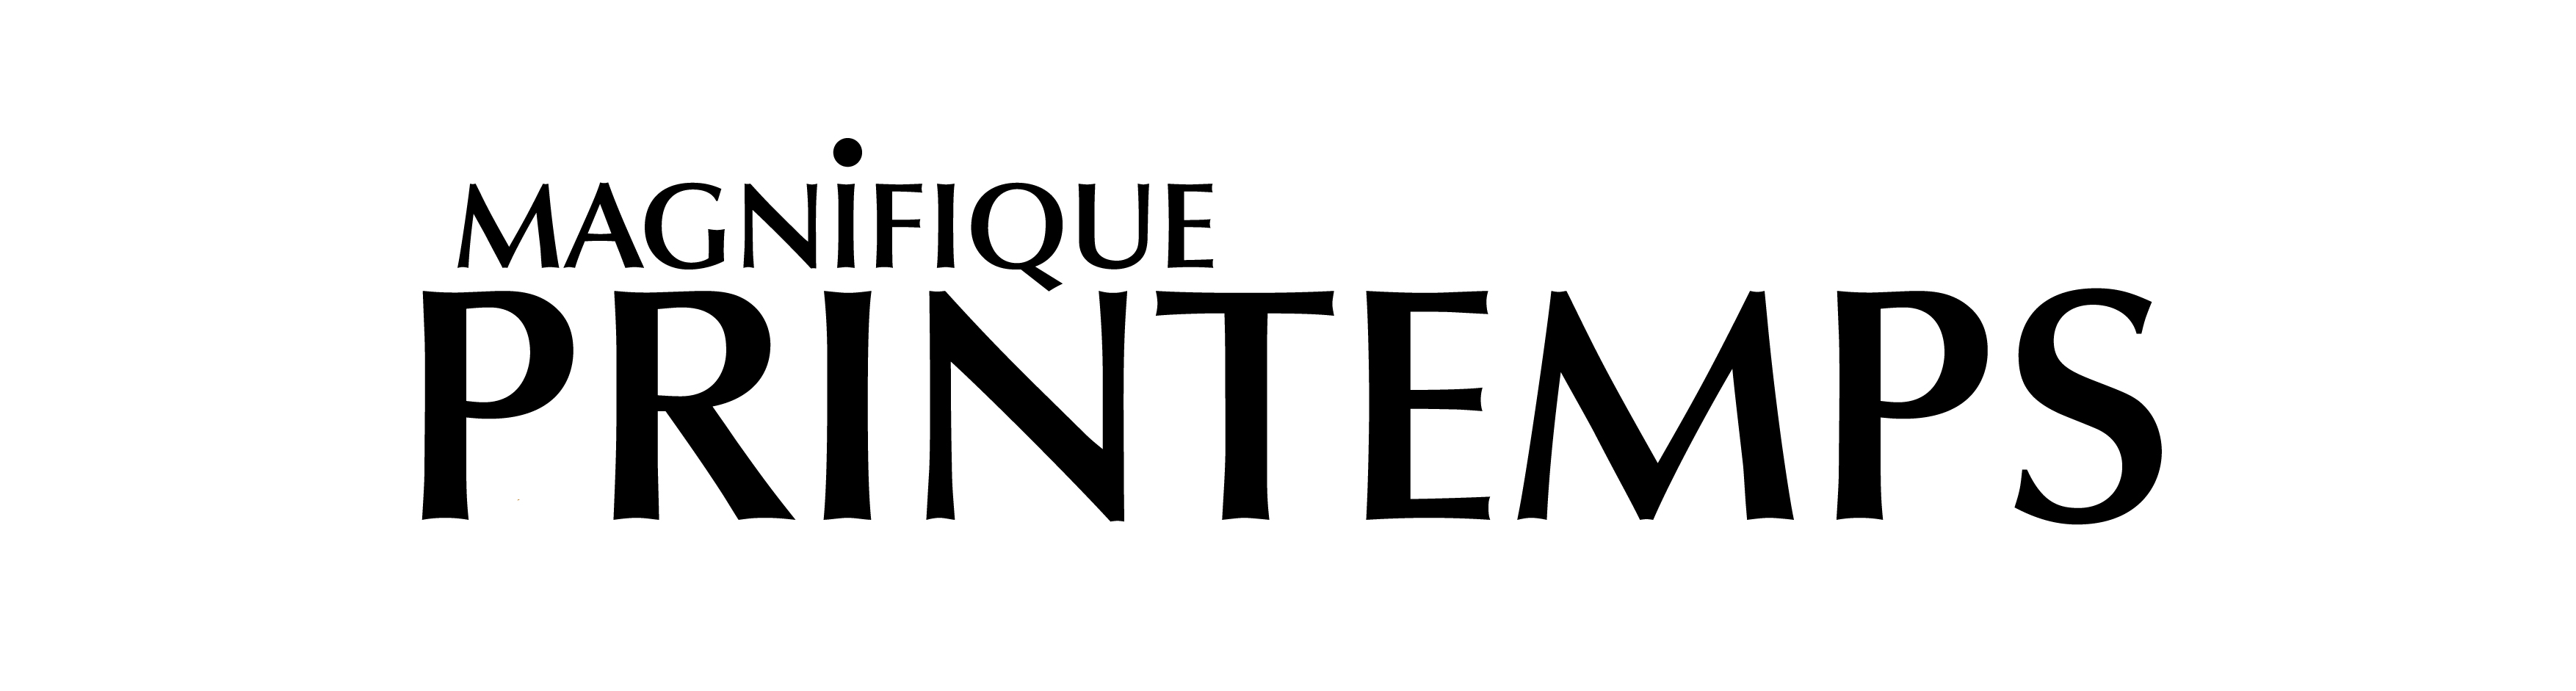 Logo Magnifique Printemps